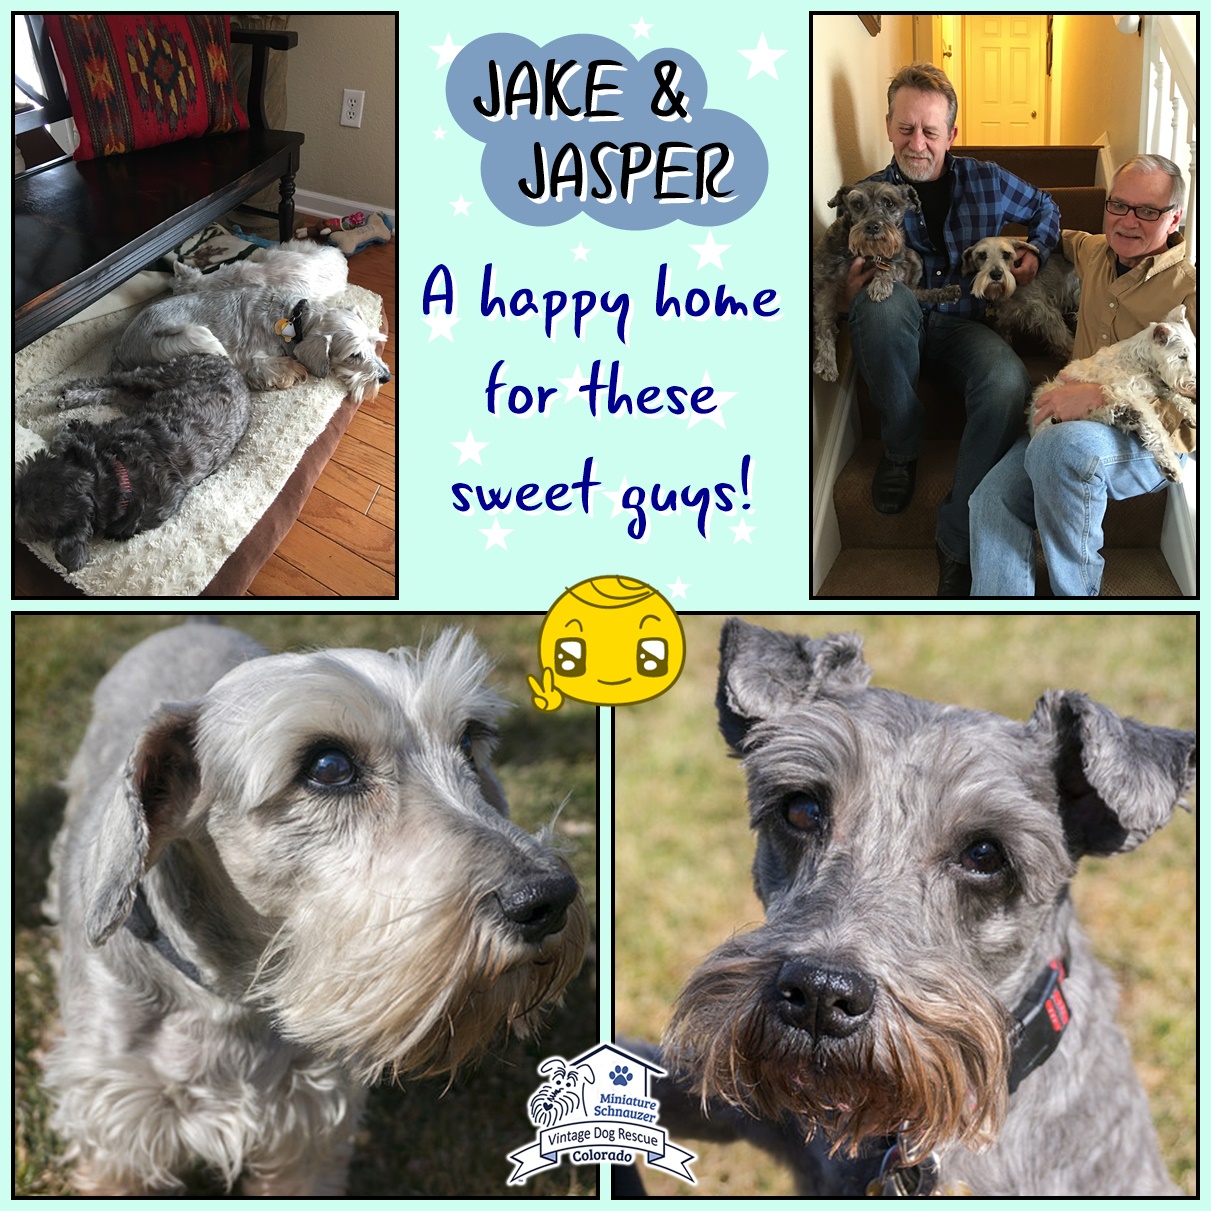 Jake & Jasper (Mini Schnauzers adopted)